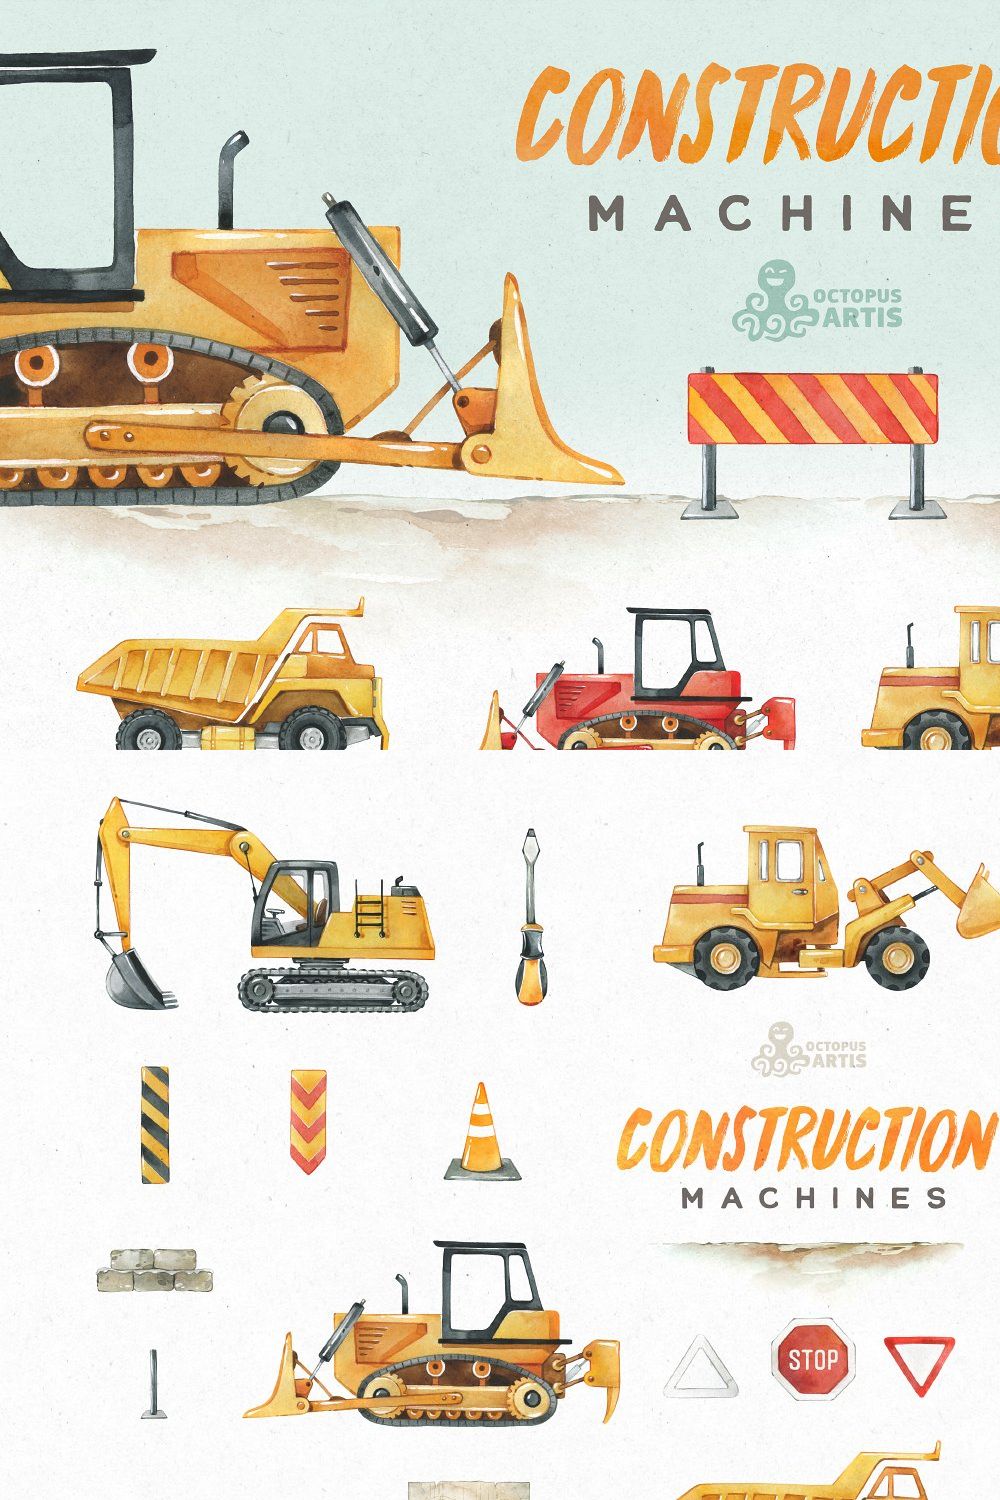 Construction Machines pinterest preview image.